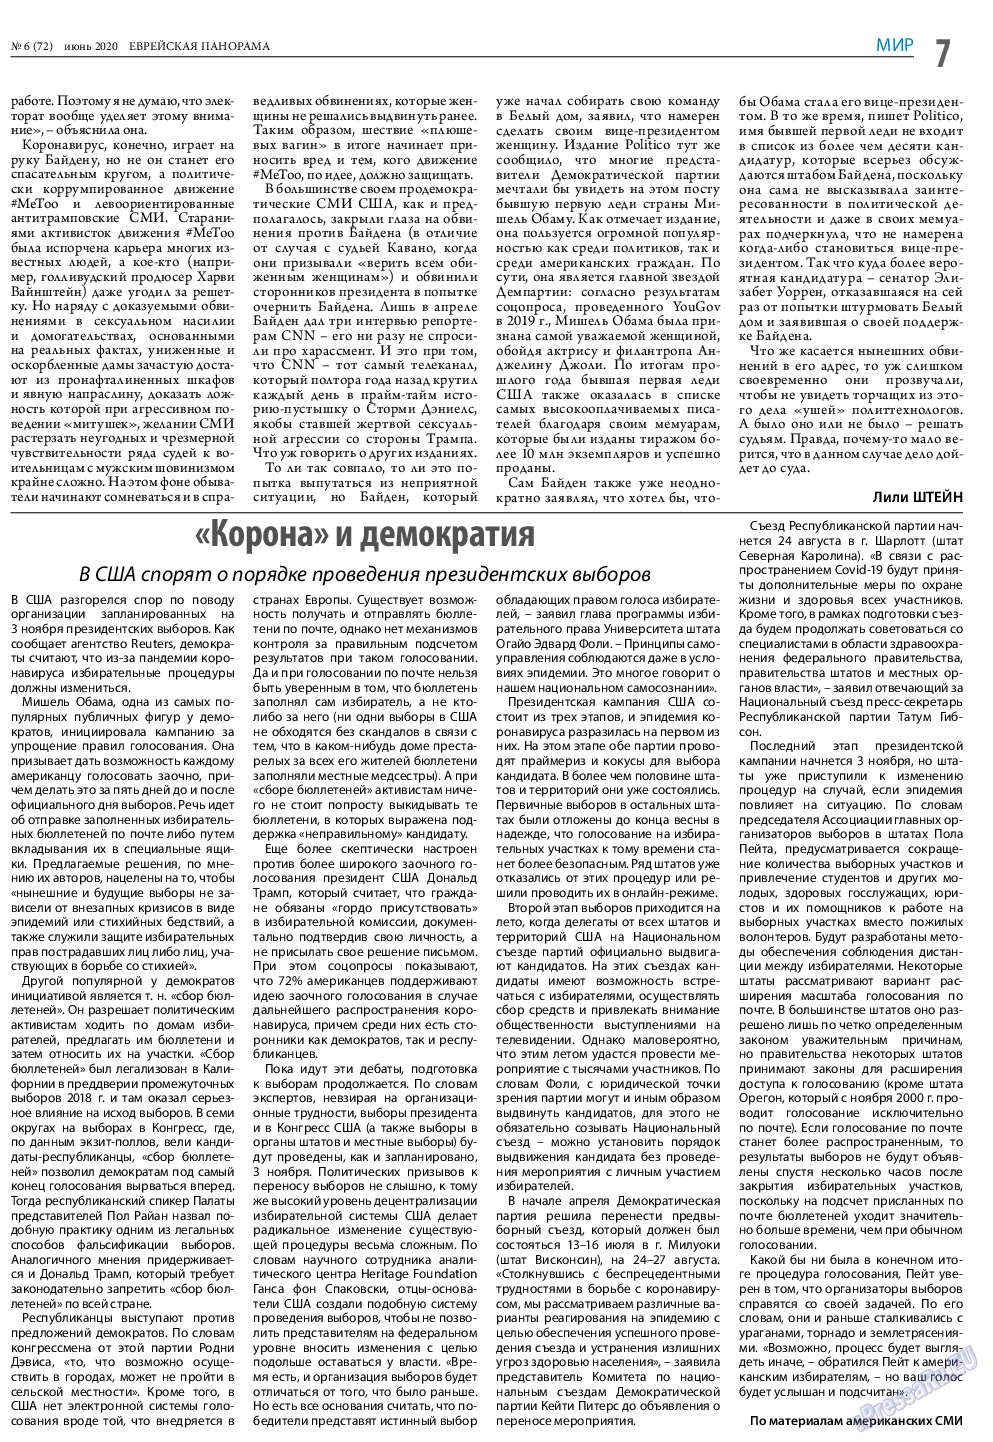 Еврейская панорама, газета. 2020 №6 стр.7